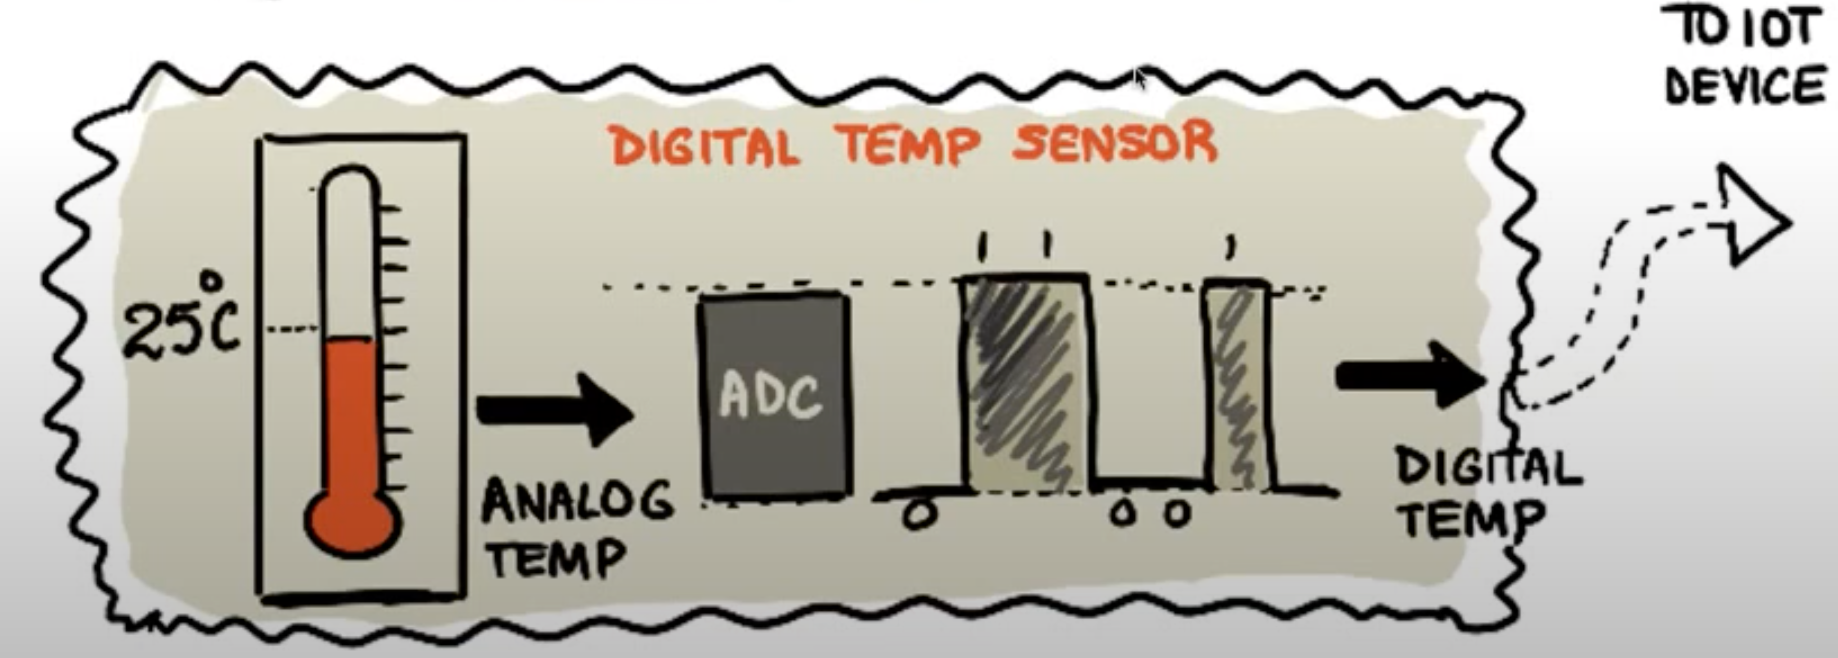 Digital Sensors Anatomy